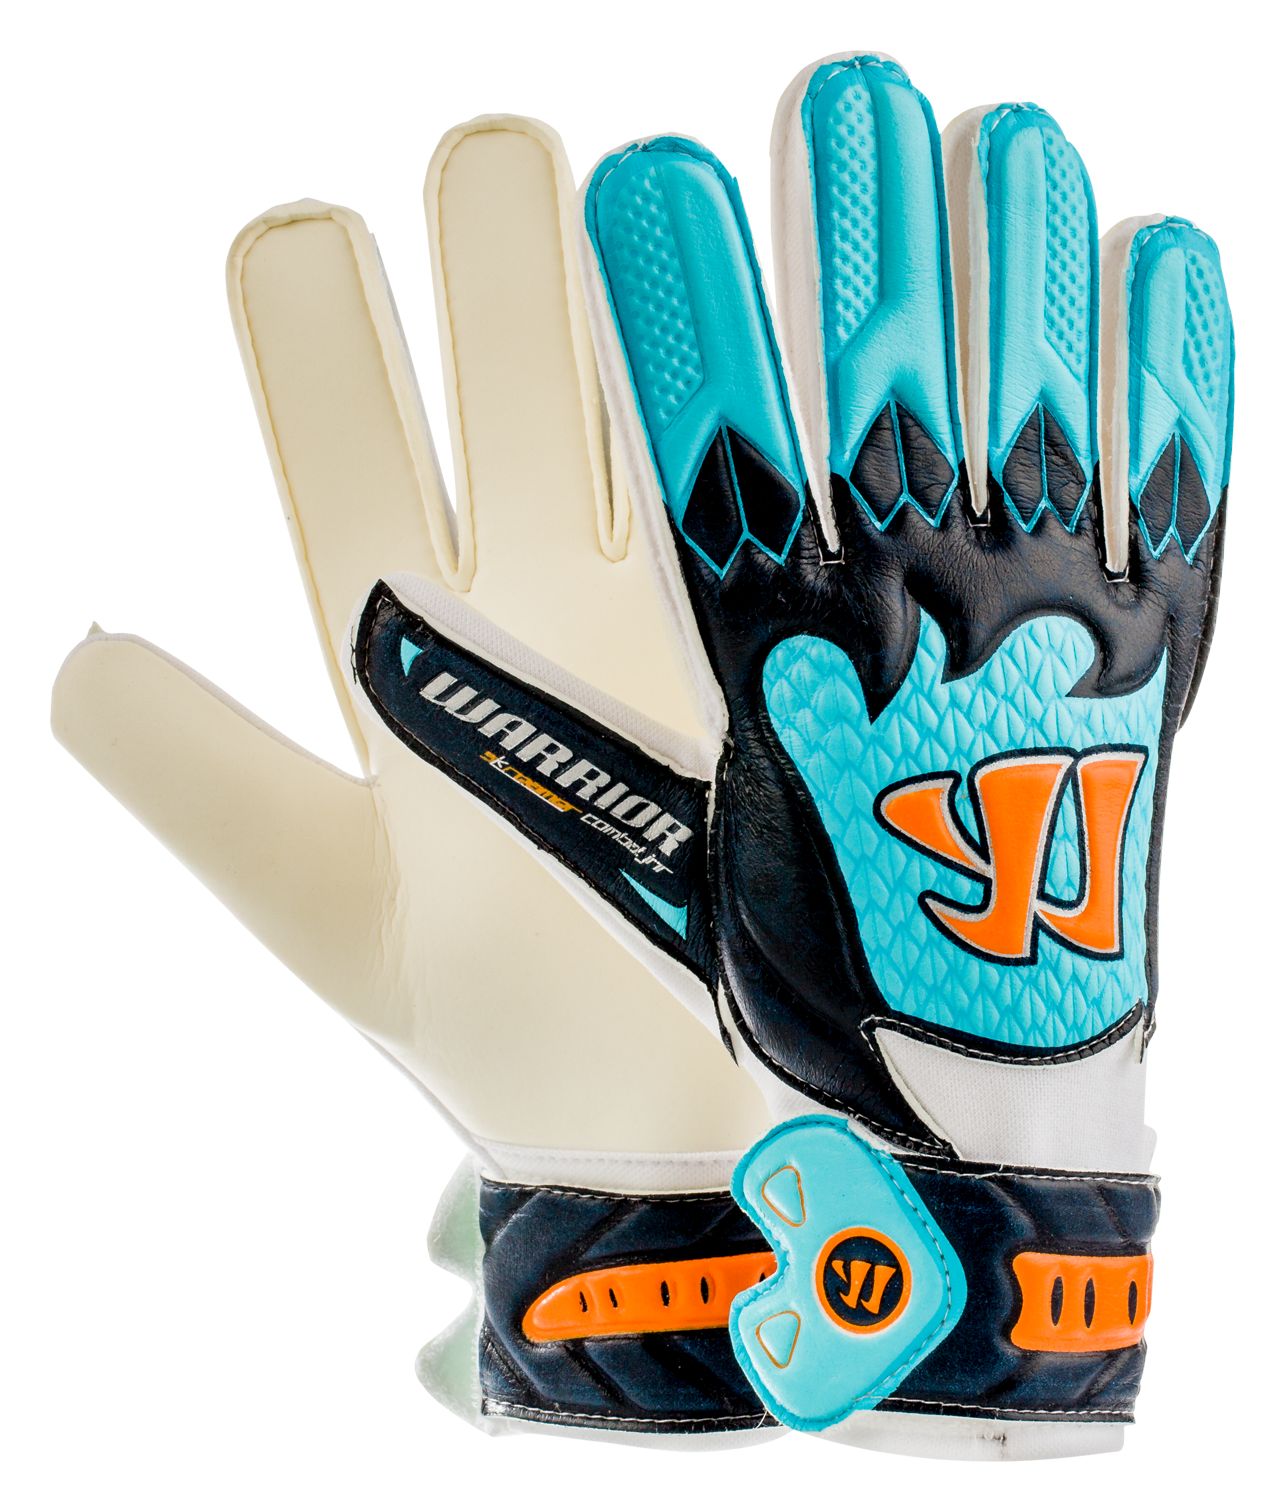 Skreamer Combat Junior Goalkeeper Gloves, White with Blue Radiance & Insignia Blue image number 0